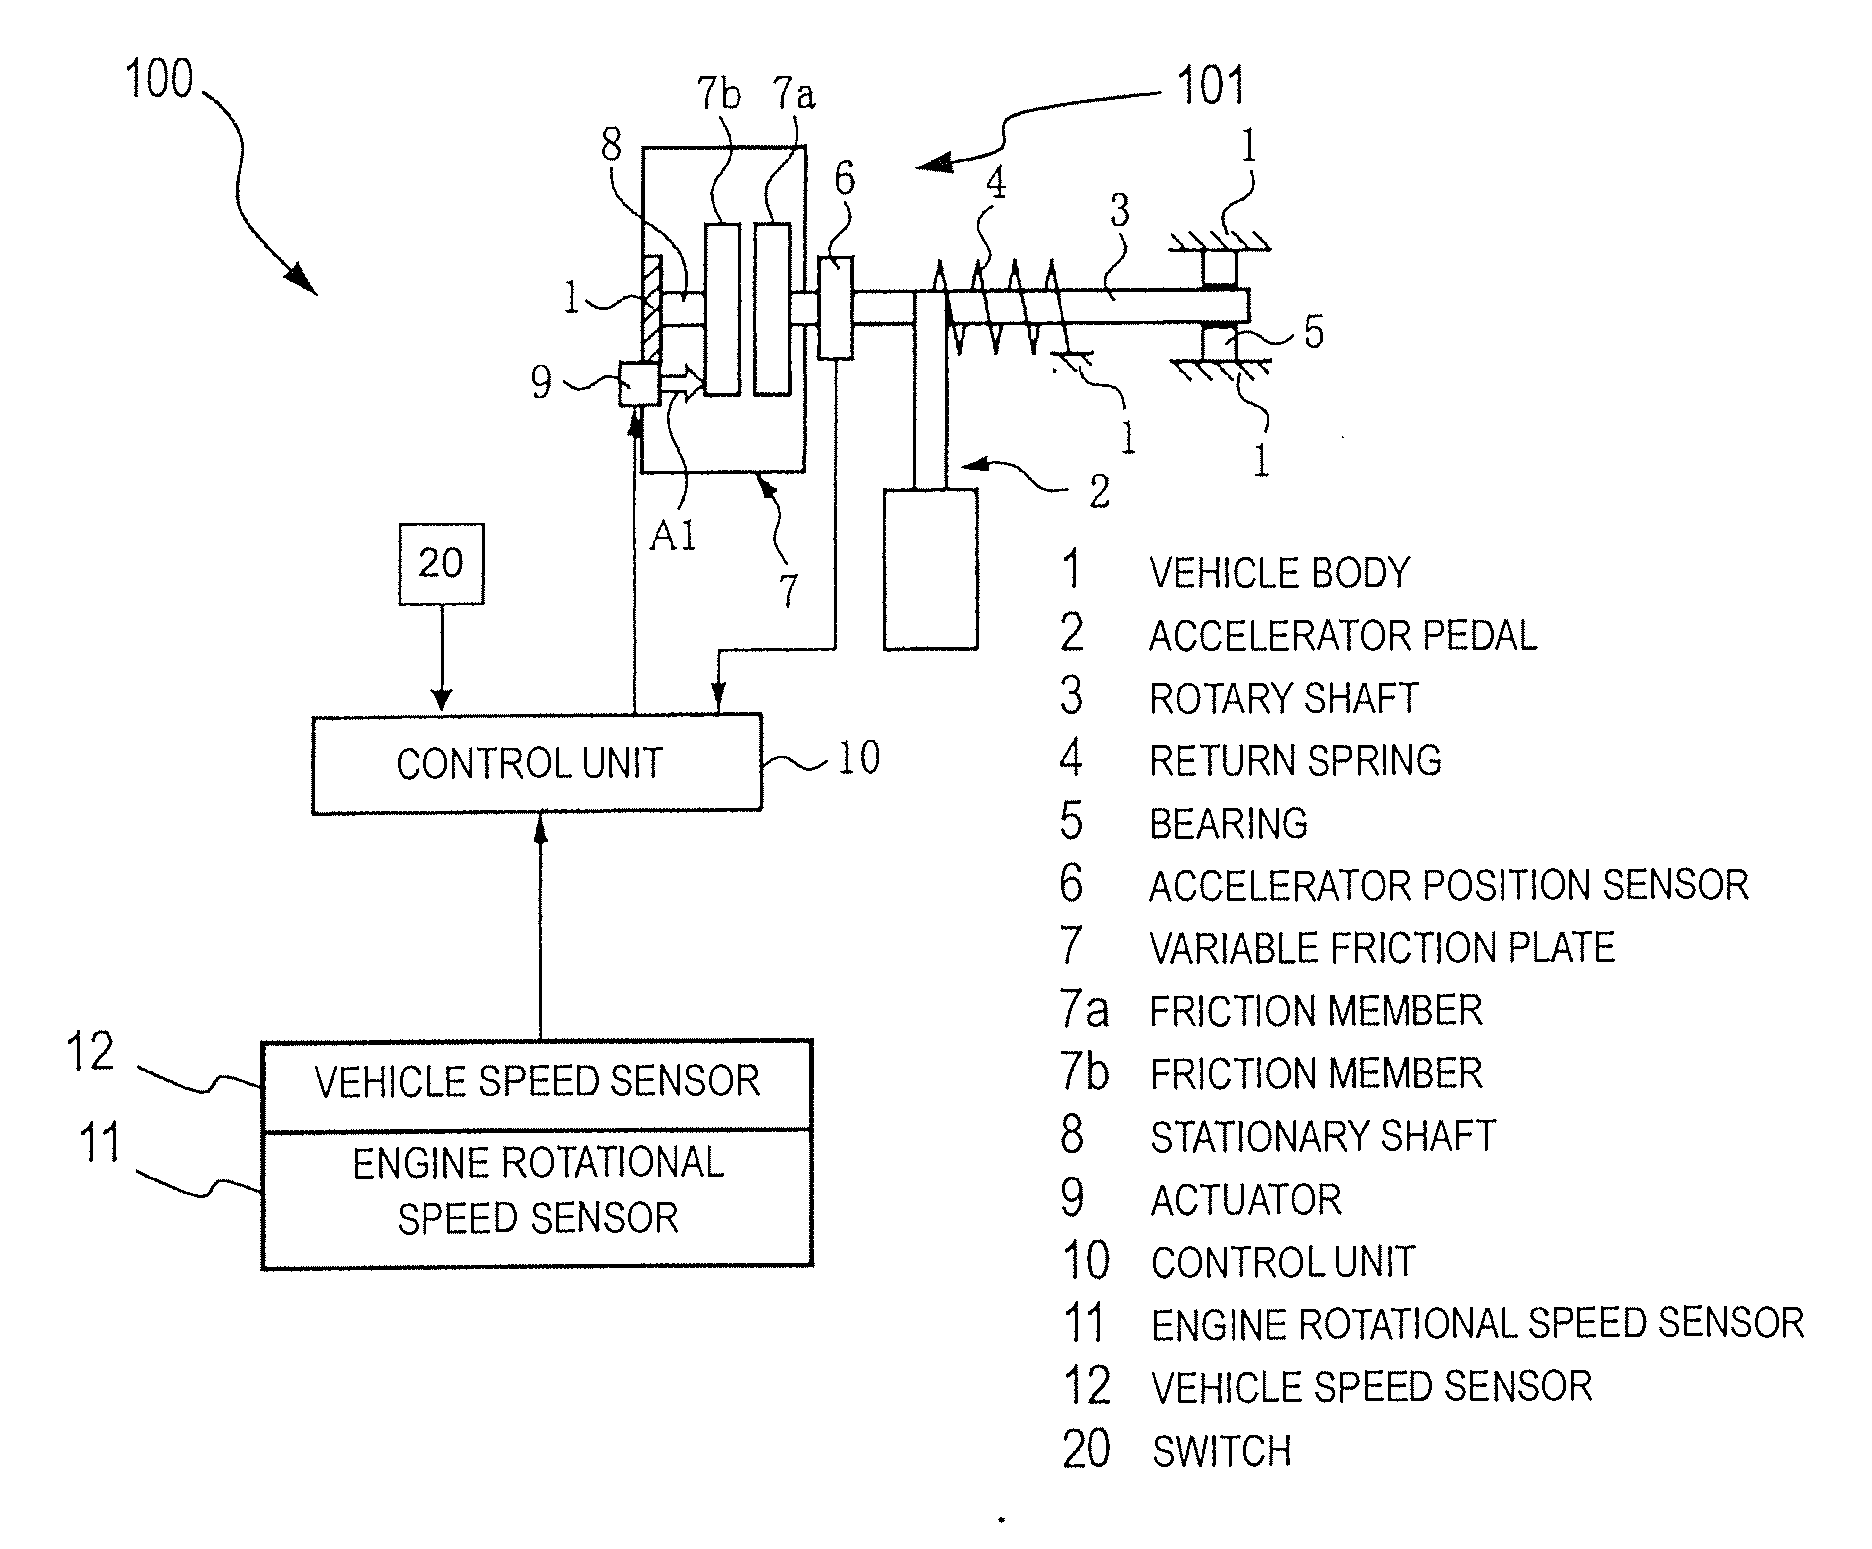 Accelerator reaction force control apparatus